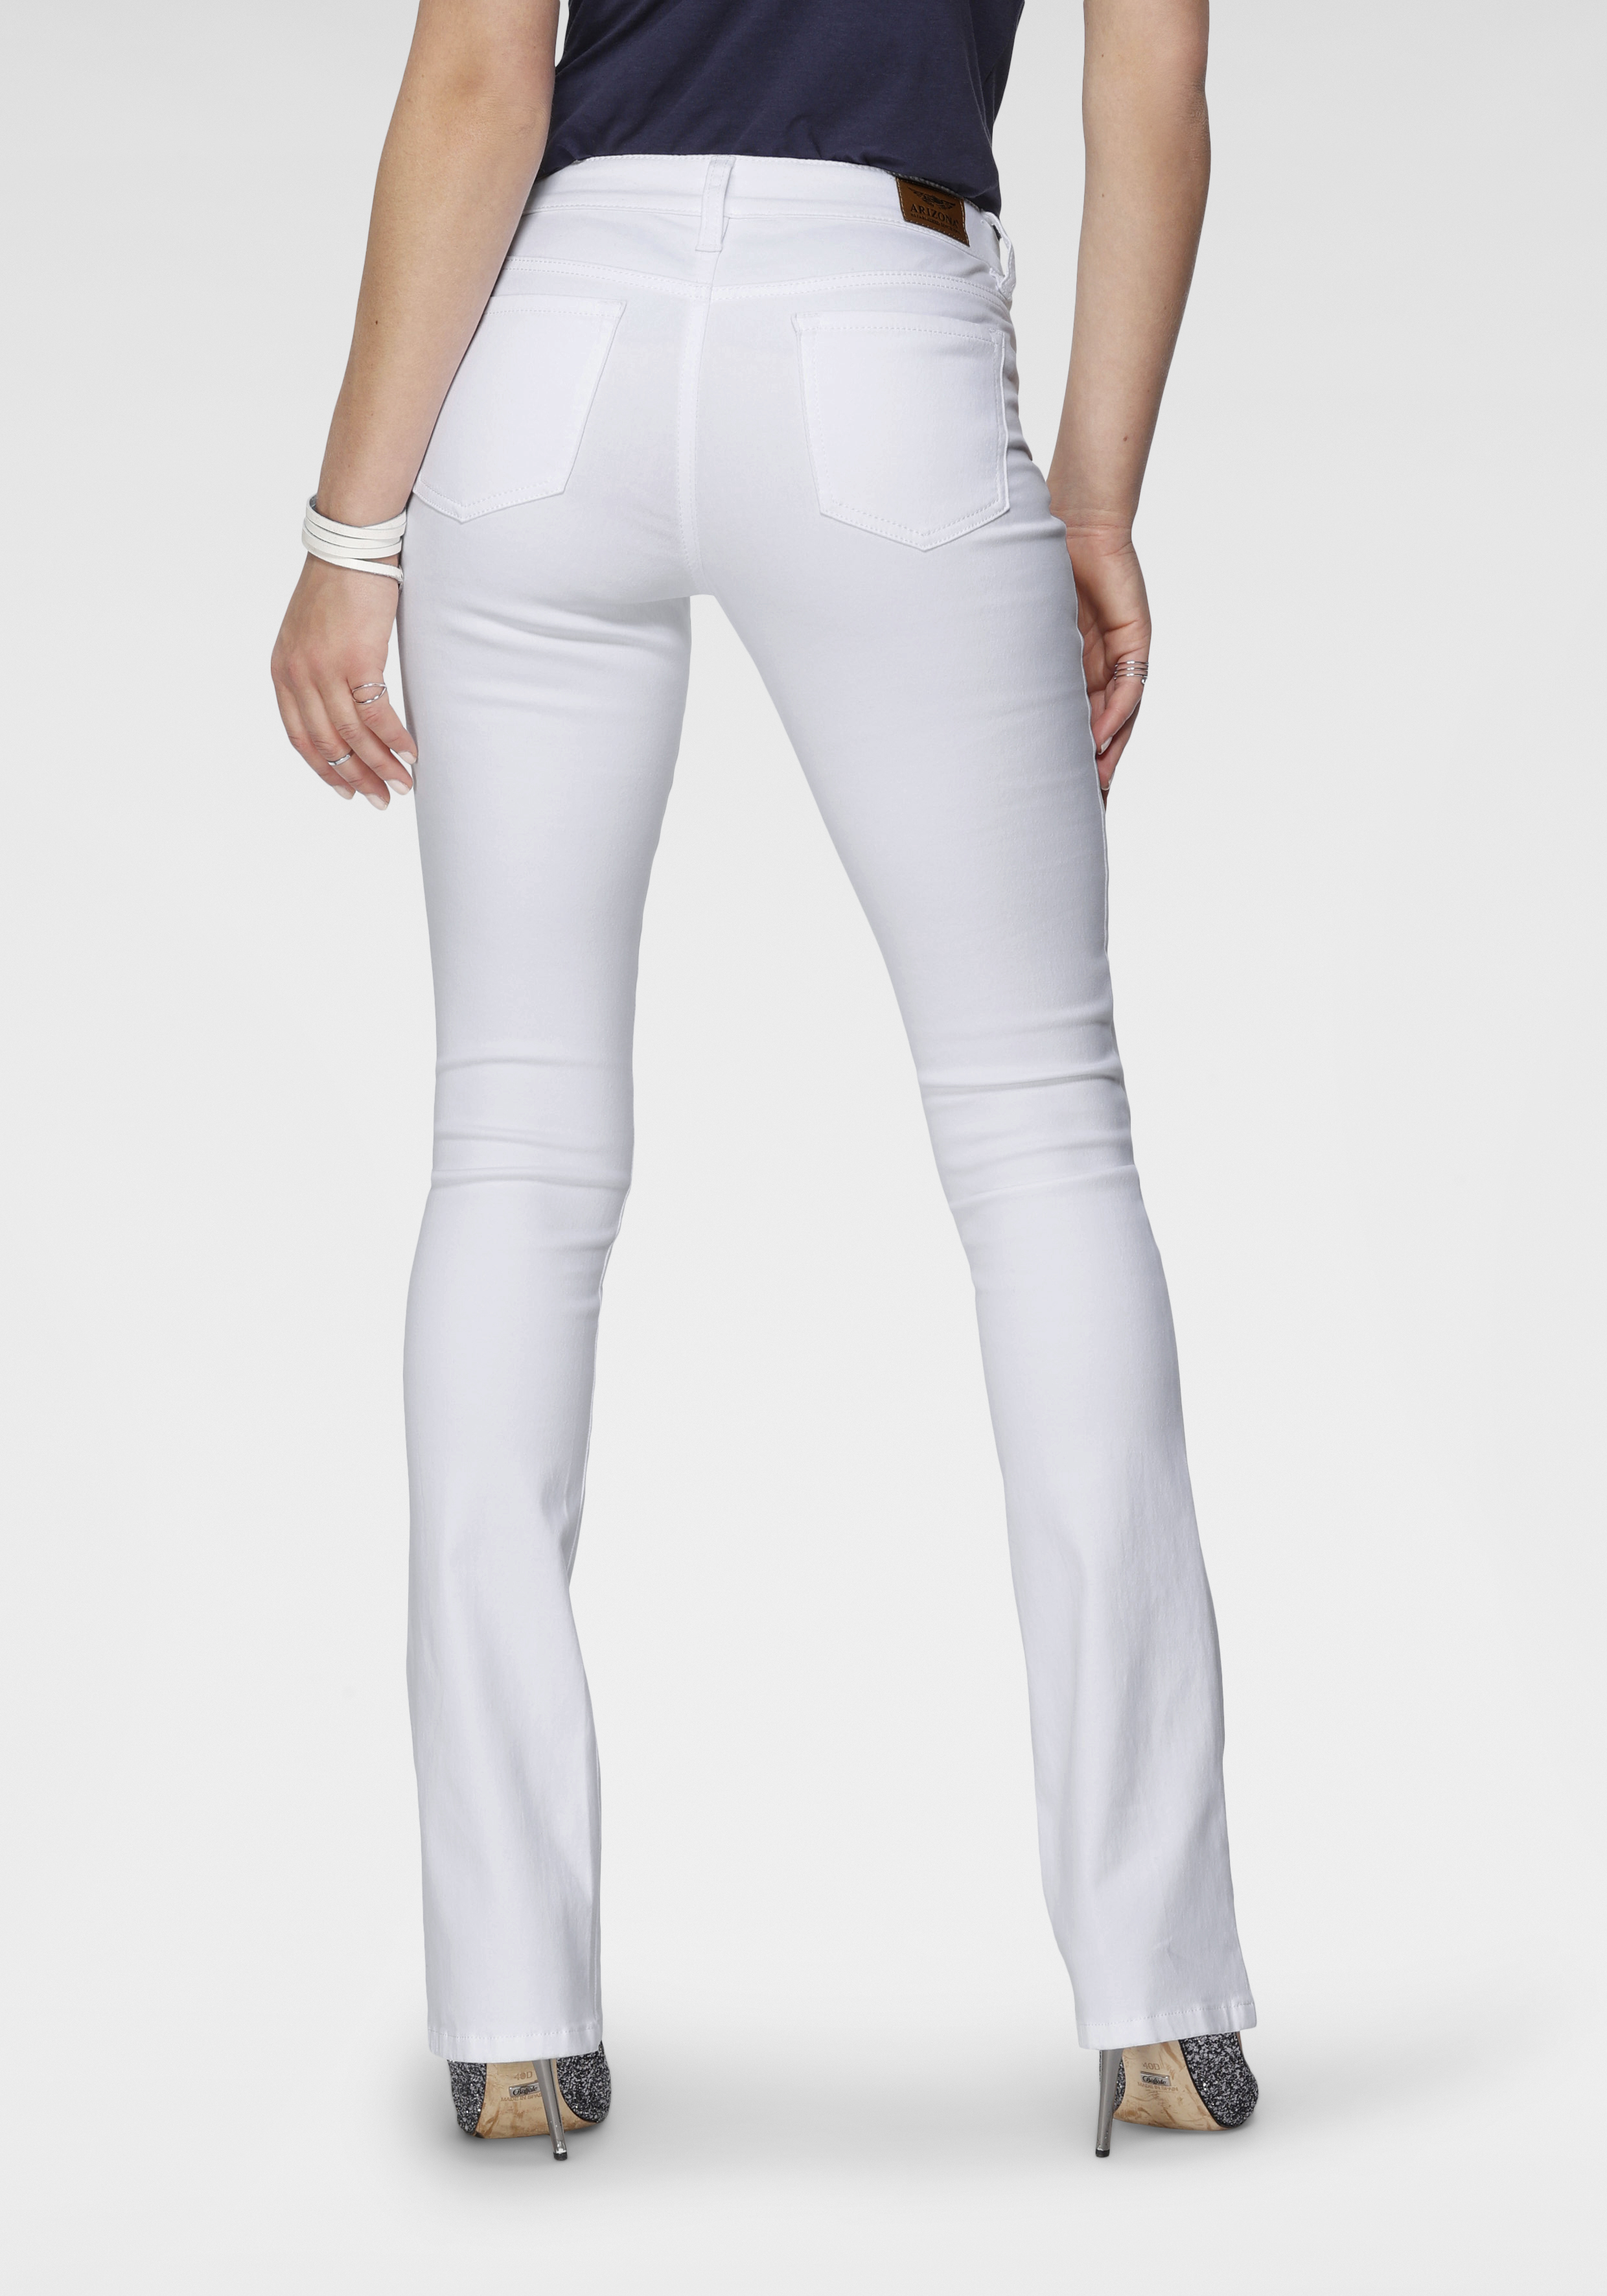 ARIZONA Jeans in Weiß 